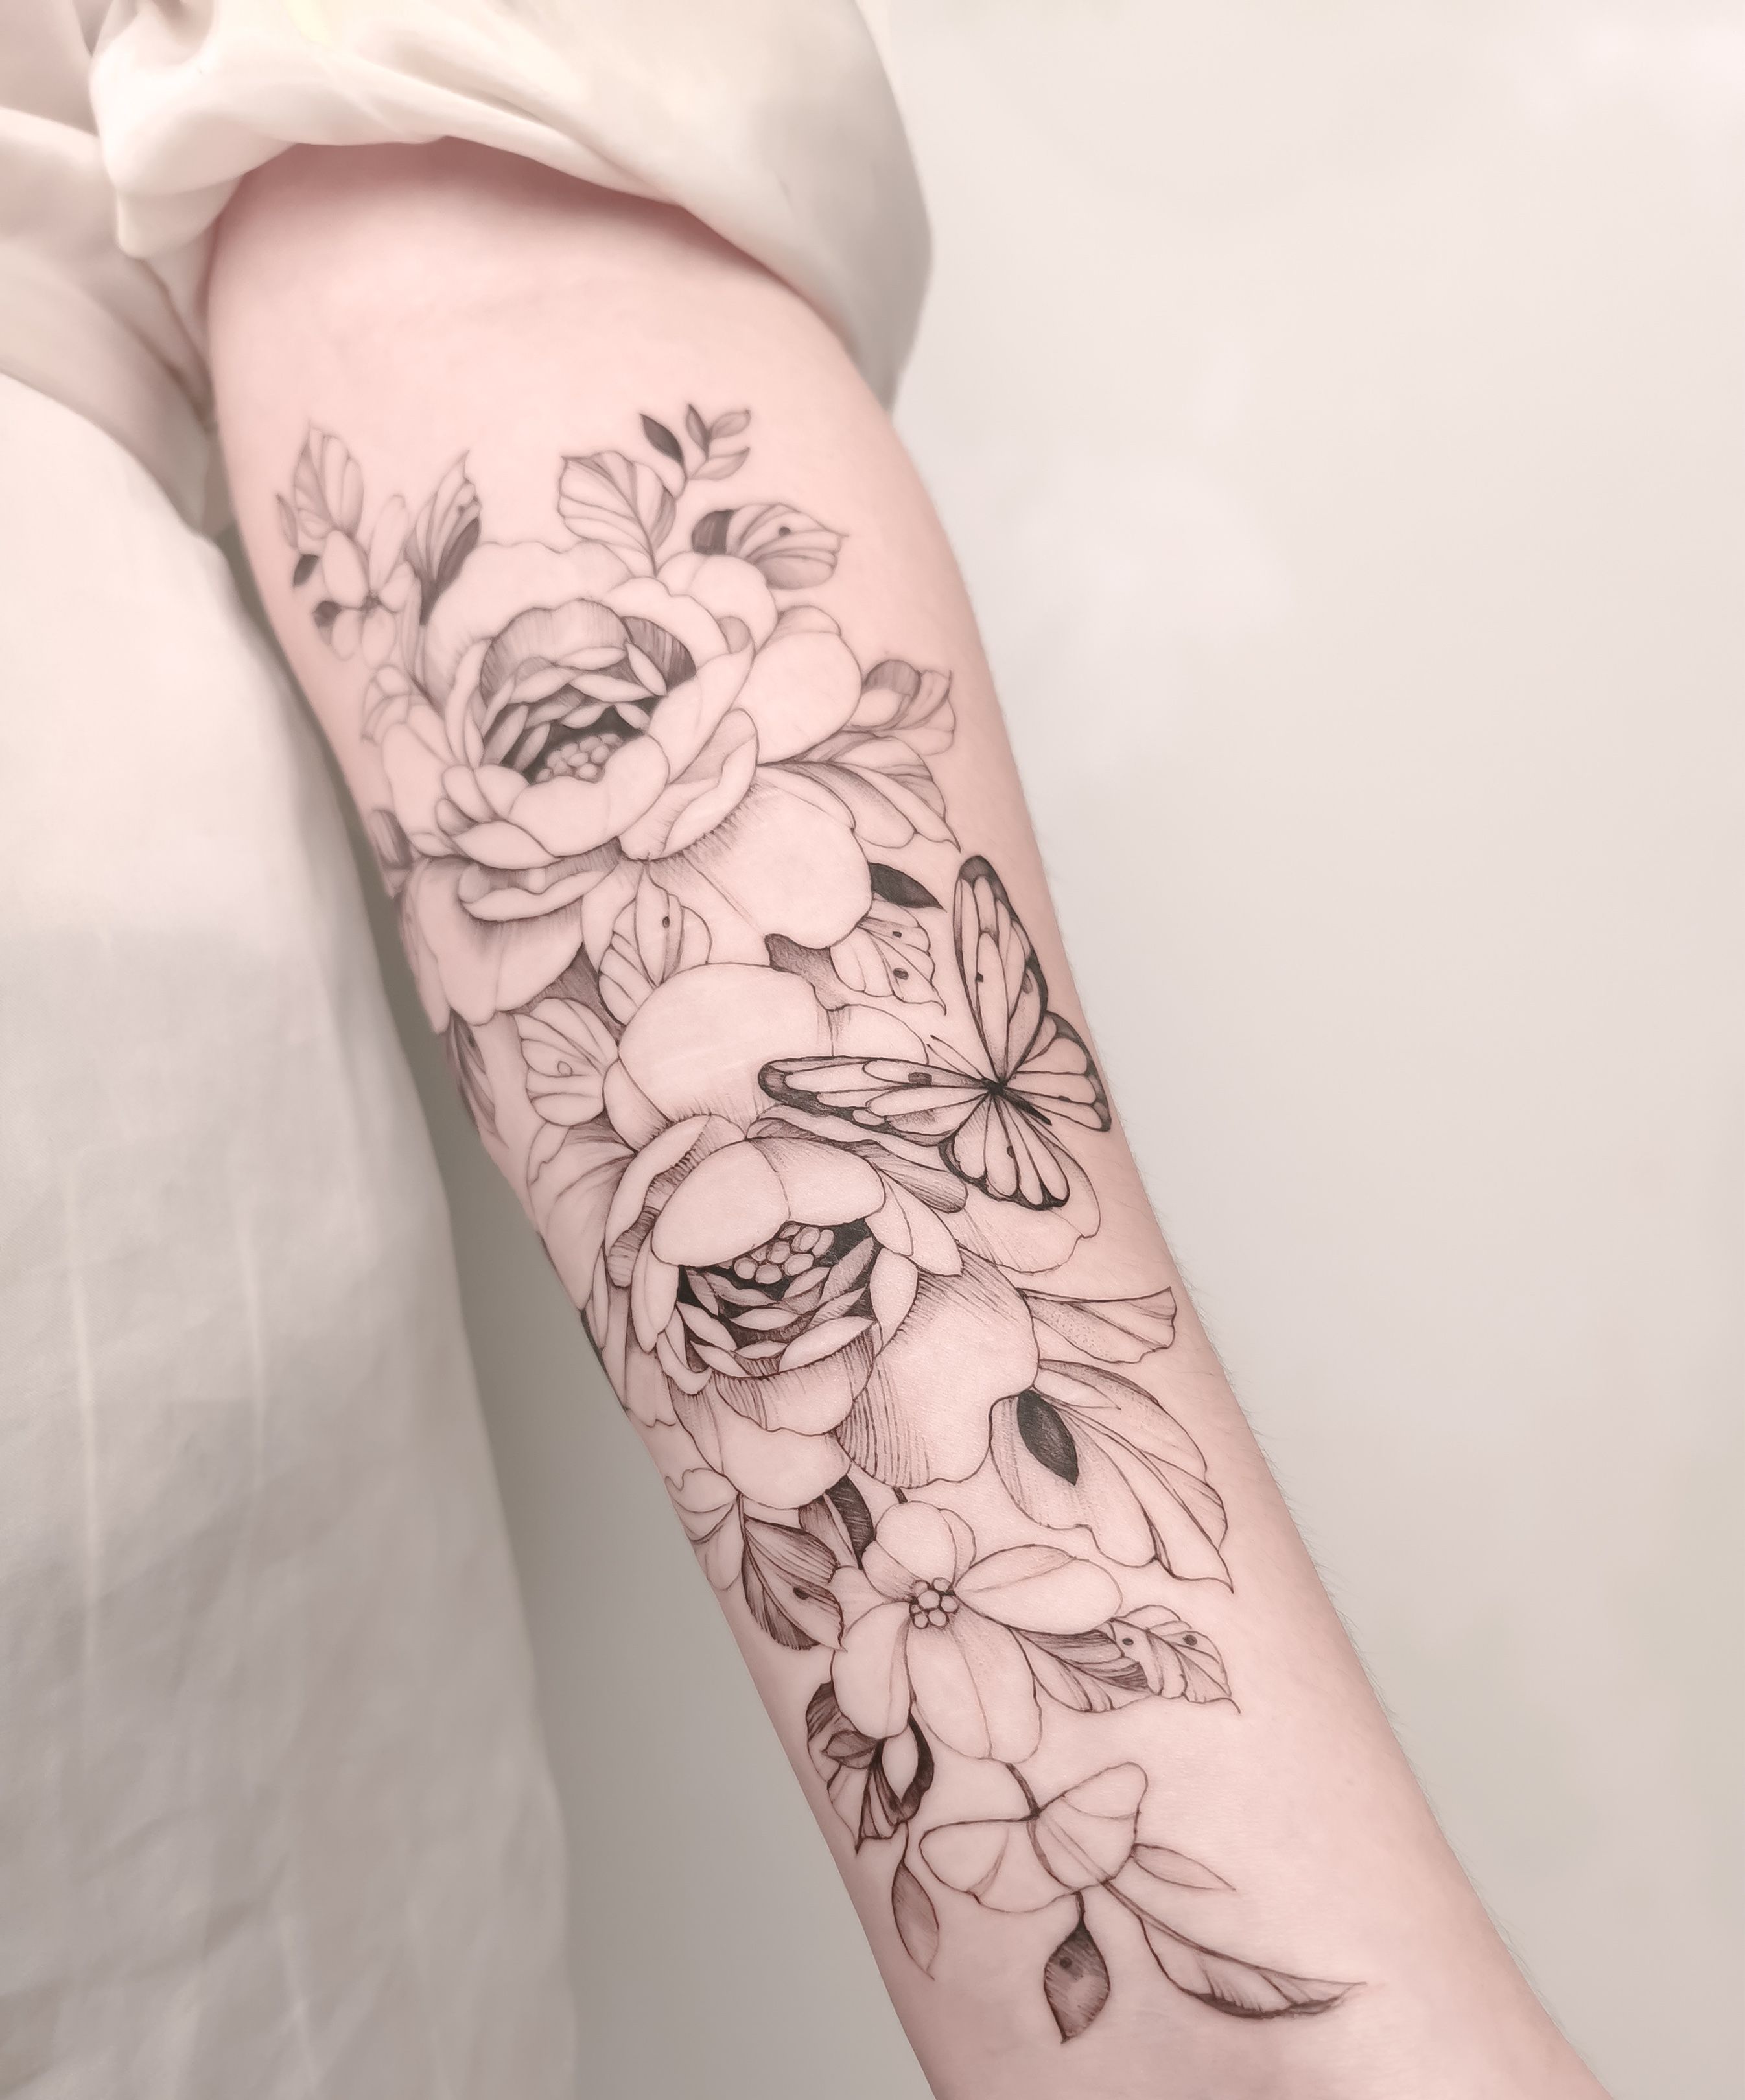 Tattoo uploaded by Wiwi Schrøder • Half sleeve with butterfly 🦋 . . . .  #finelinetattoo #finelinefloraltattoo #floral #floraltattoo  #botanicaltattoo #delicate #ink #backtattoo #sleevetattoo #butterfly •  Tattoodo